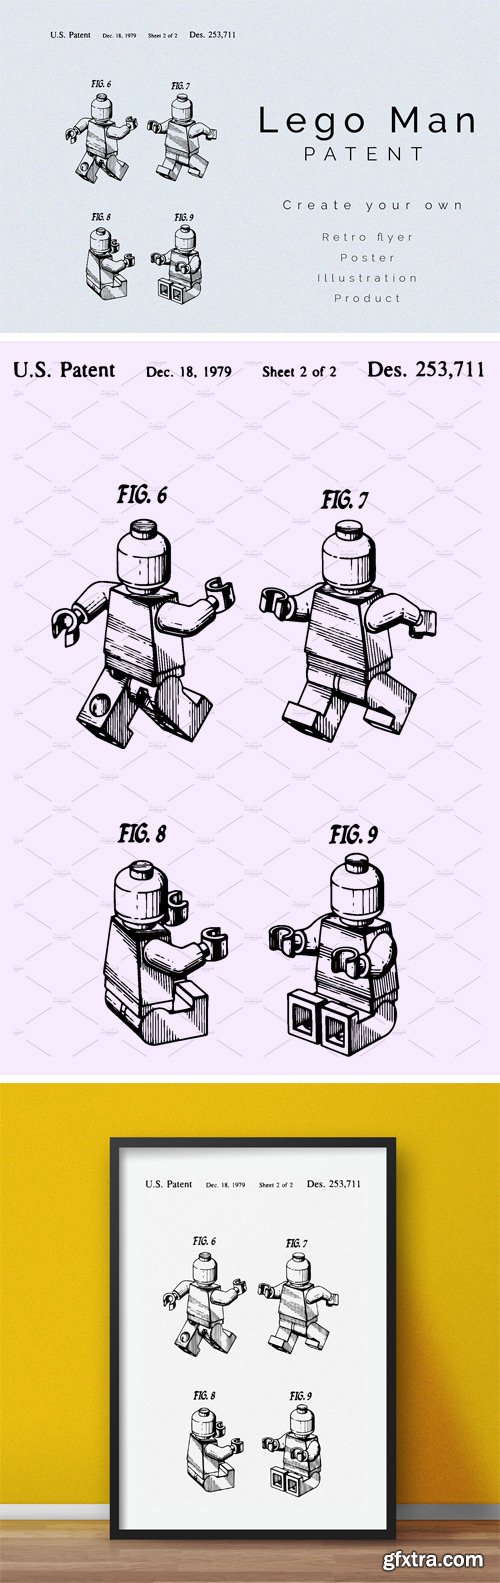 CM - Lego Man Patent 1659707